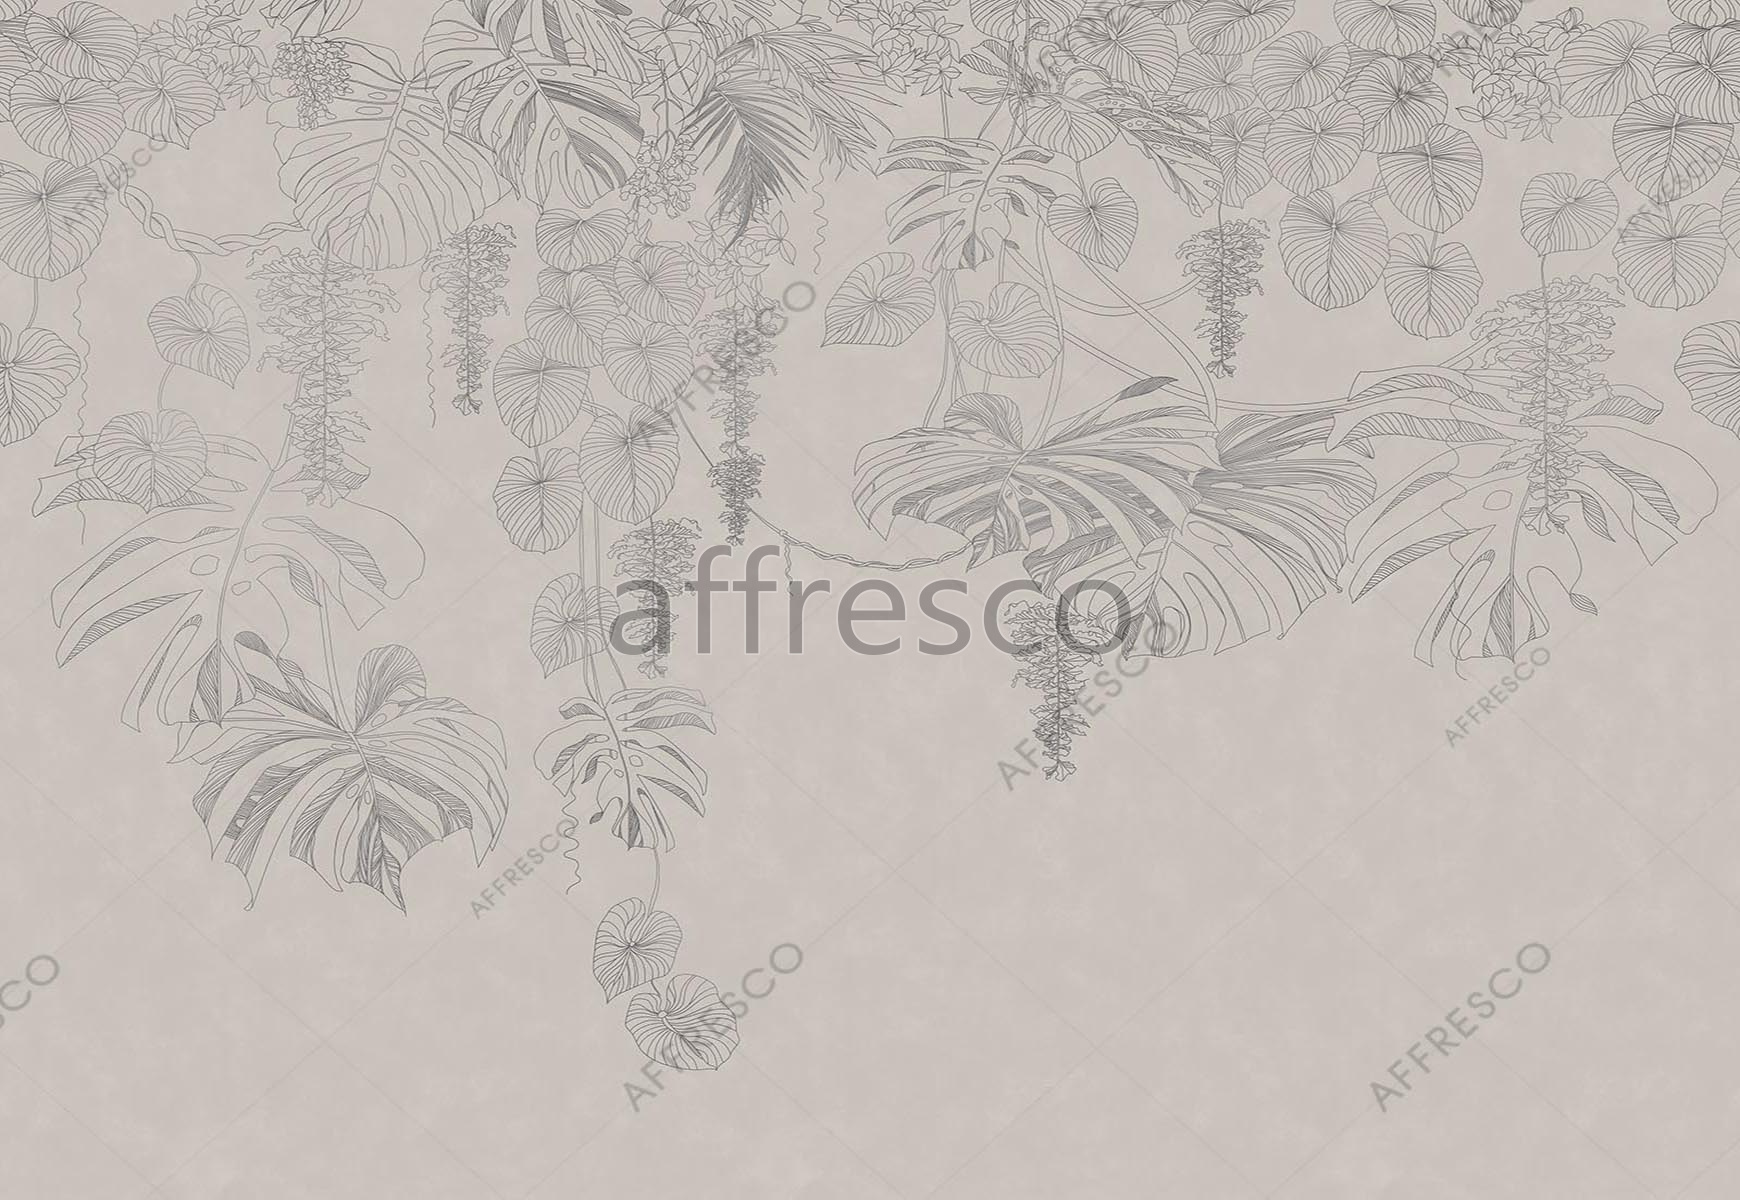 ID139159 | Tropics | Unforgettable jungles | Affresco Factory